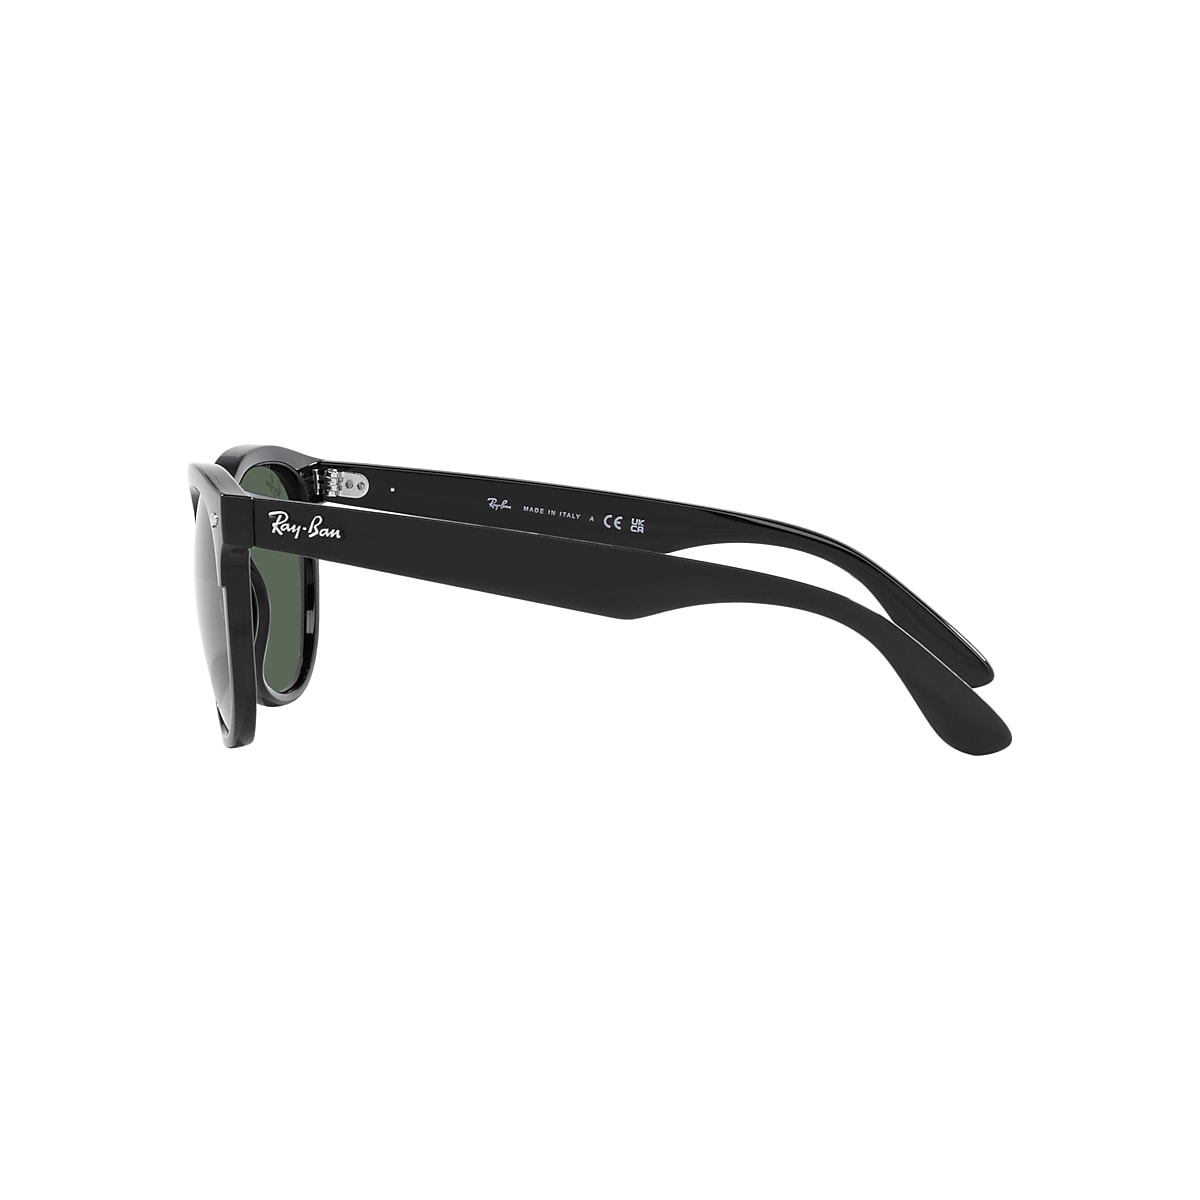 RAY-BAN RB4471 Iris Black - Unisex Sunglasses, Dark Green Lens